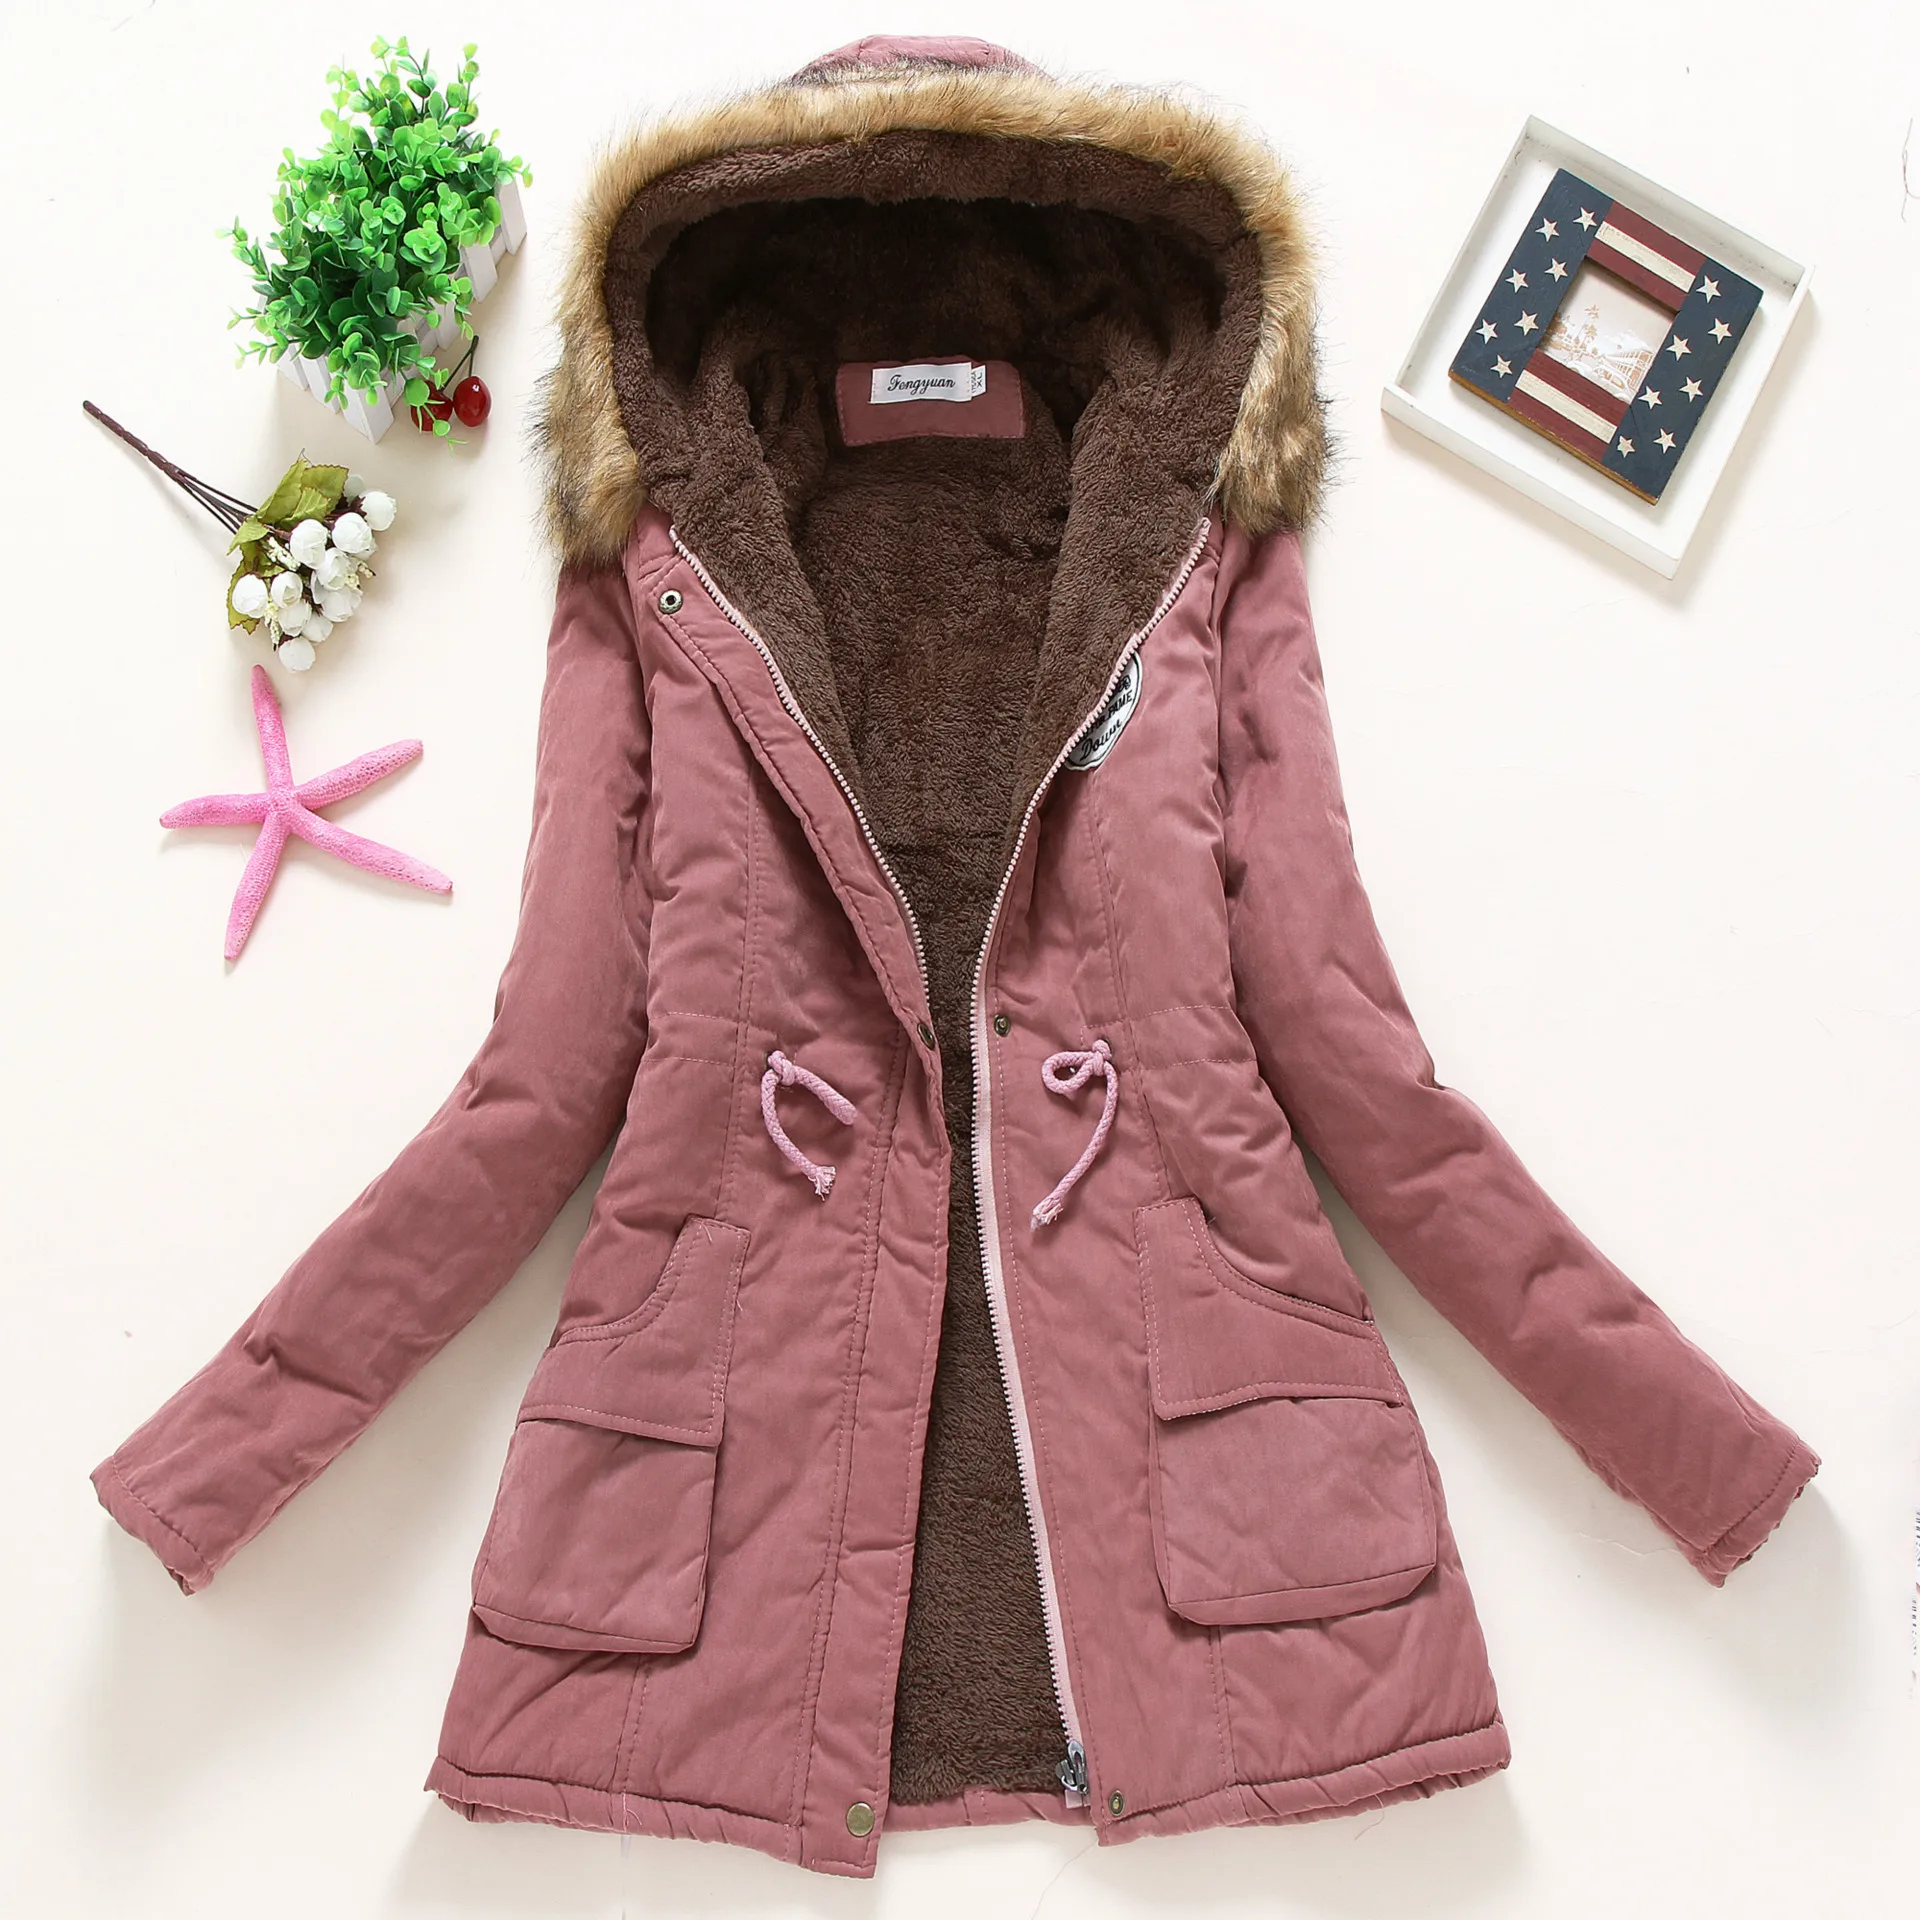 

Winter Womens Thicken Warm Coat Hood Overcoat Long Jacket Outwear New, 16 colors to choose